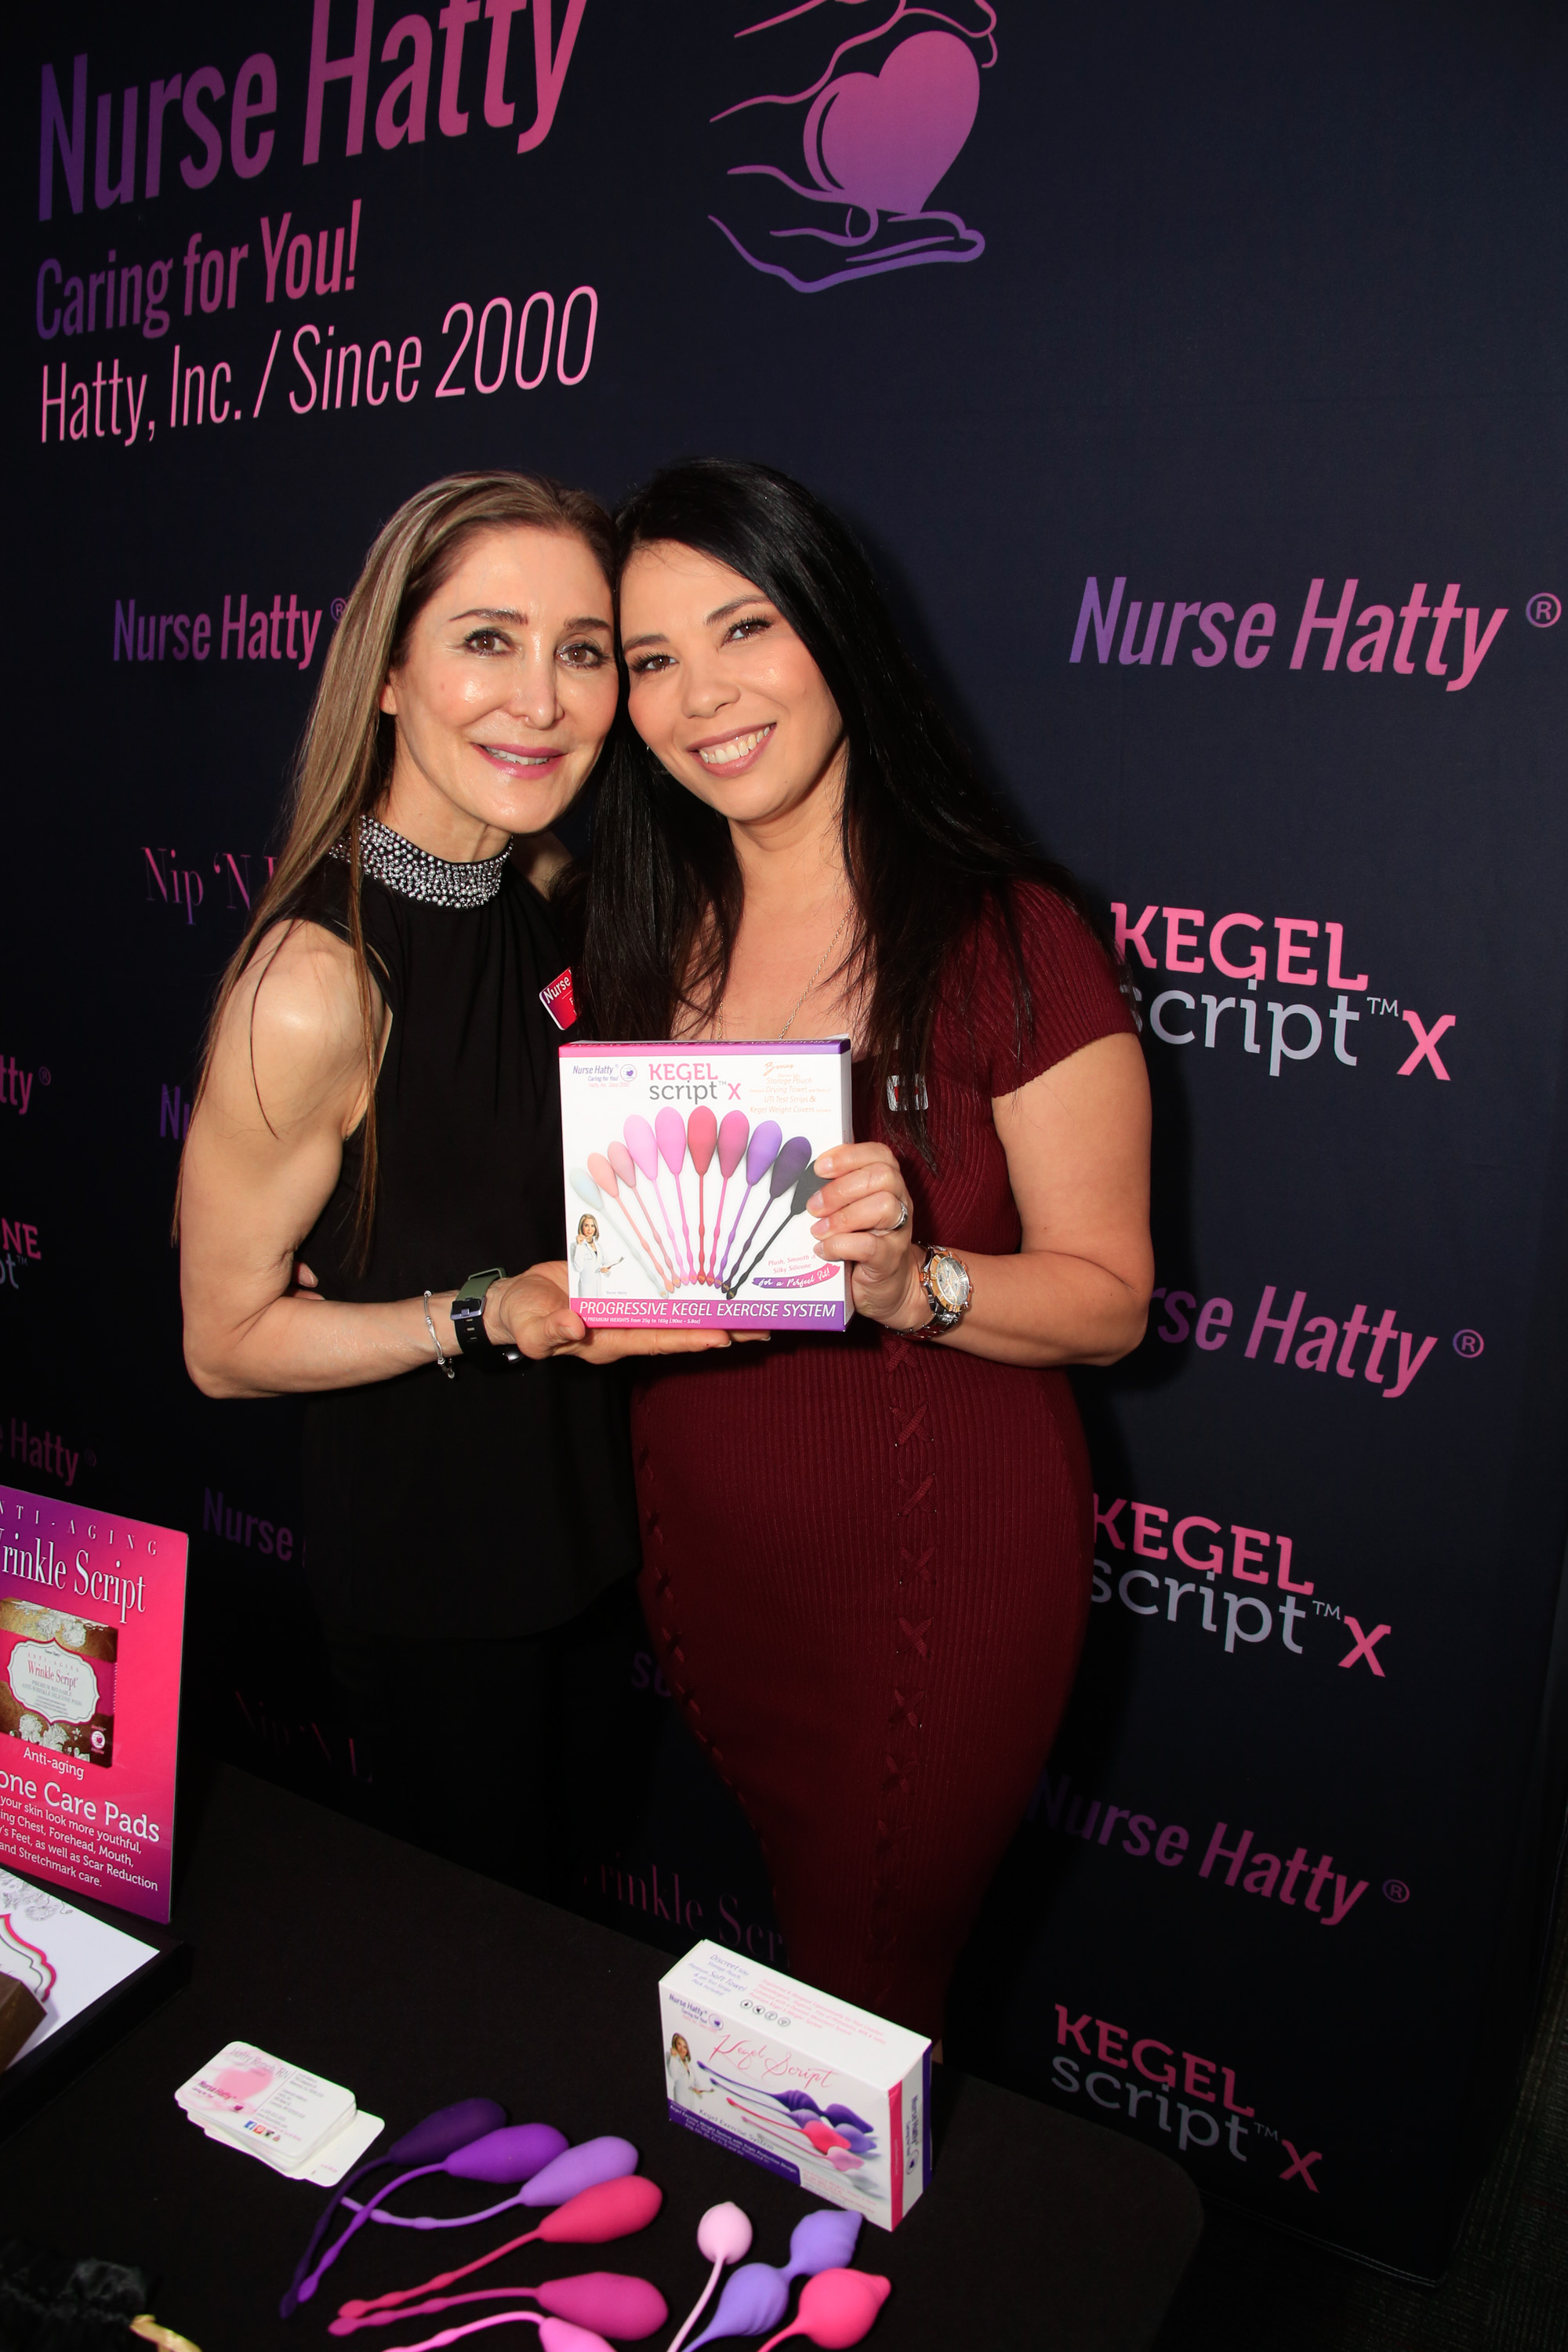 Nurse Hatty with Celebrity displaying Kegel Script X ..